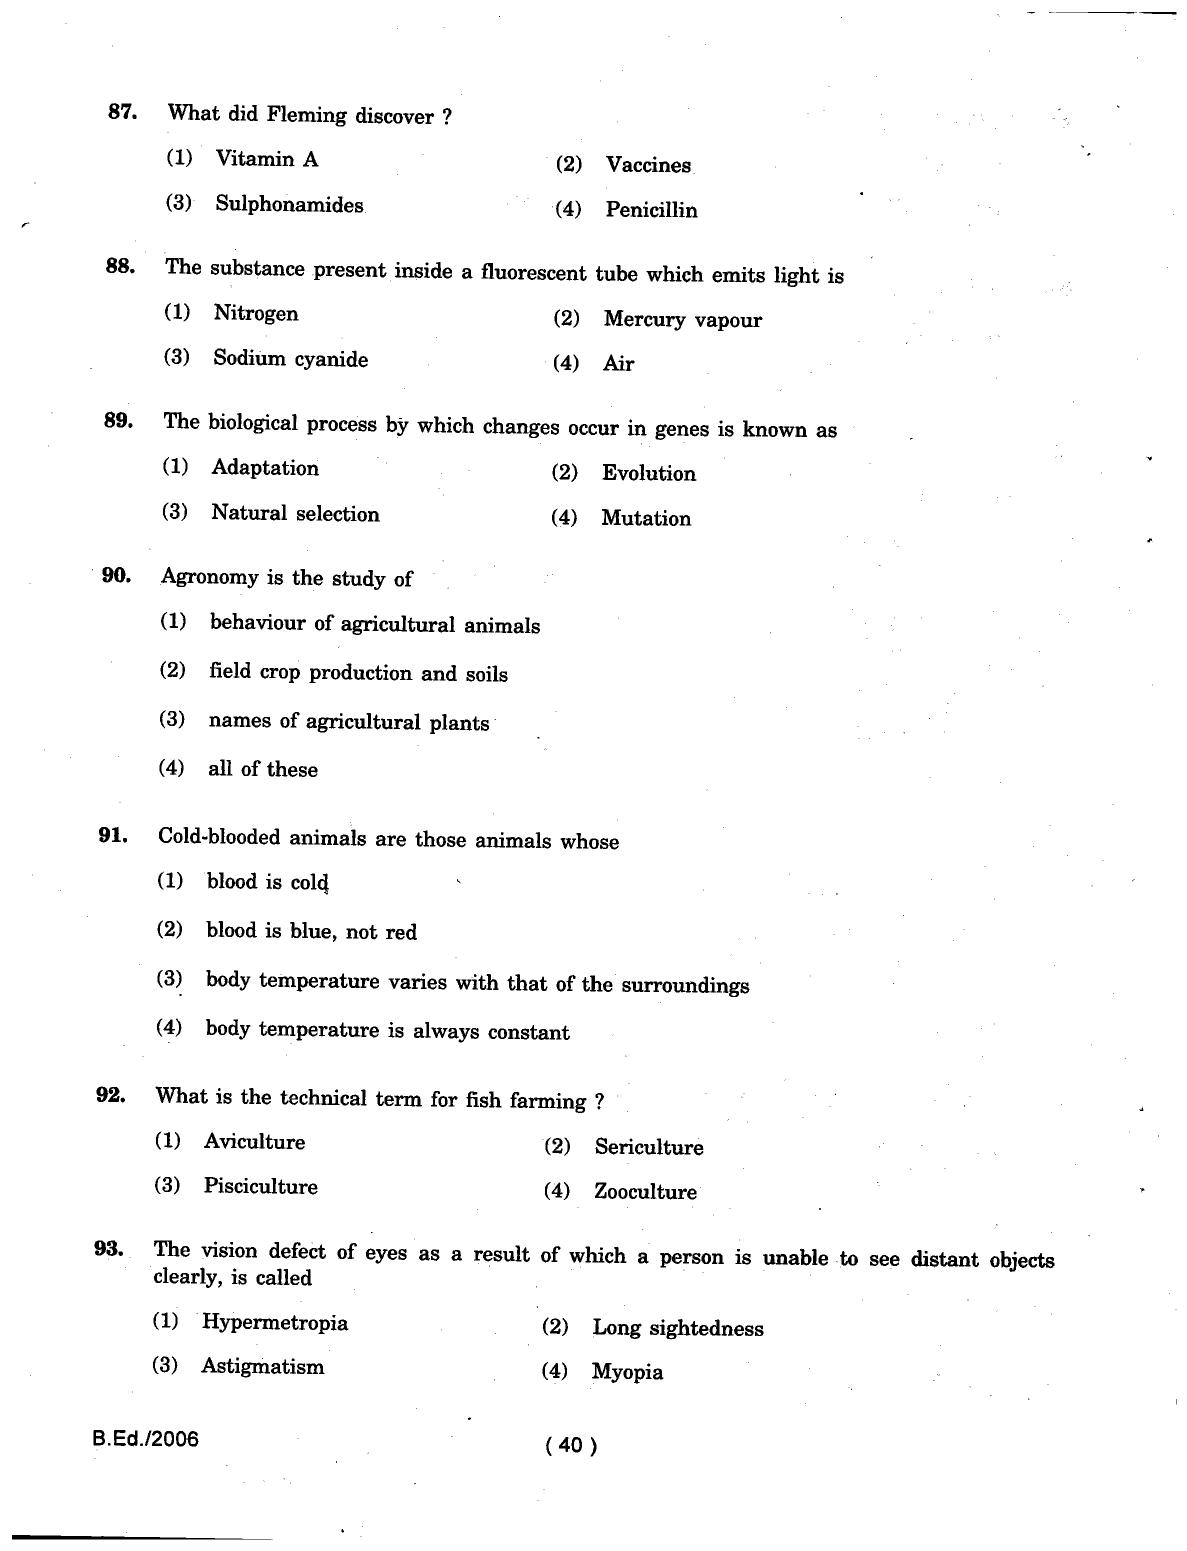 IGNOU B.Ed 2006 Question Paper - Page 40